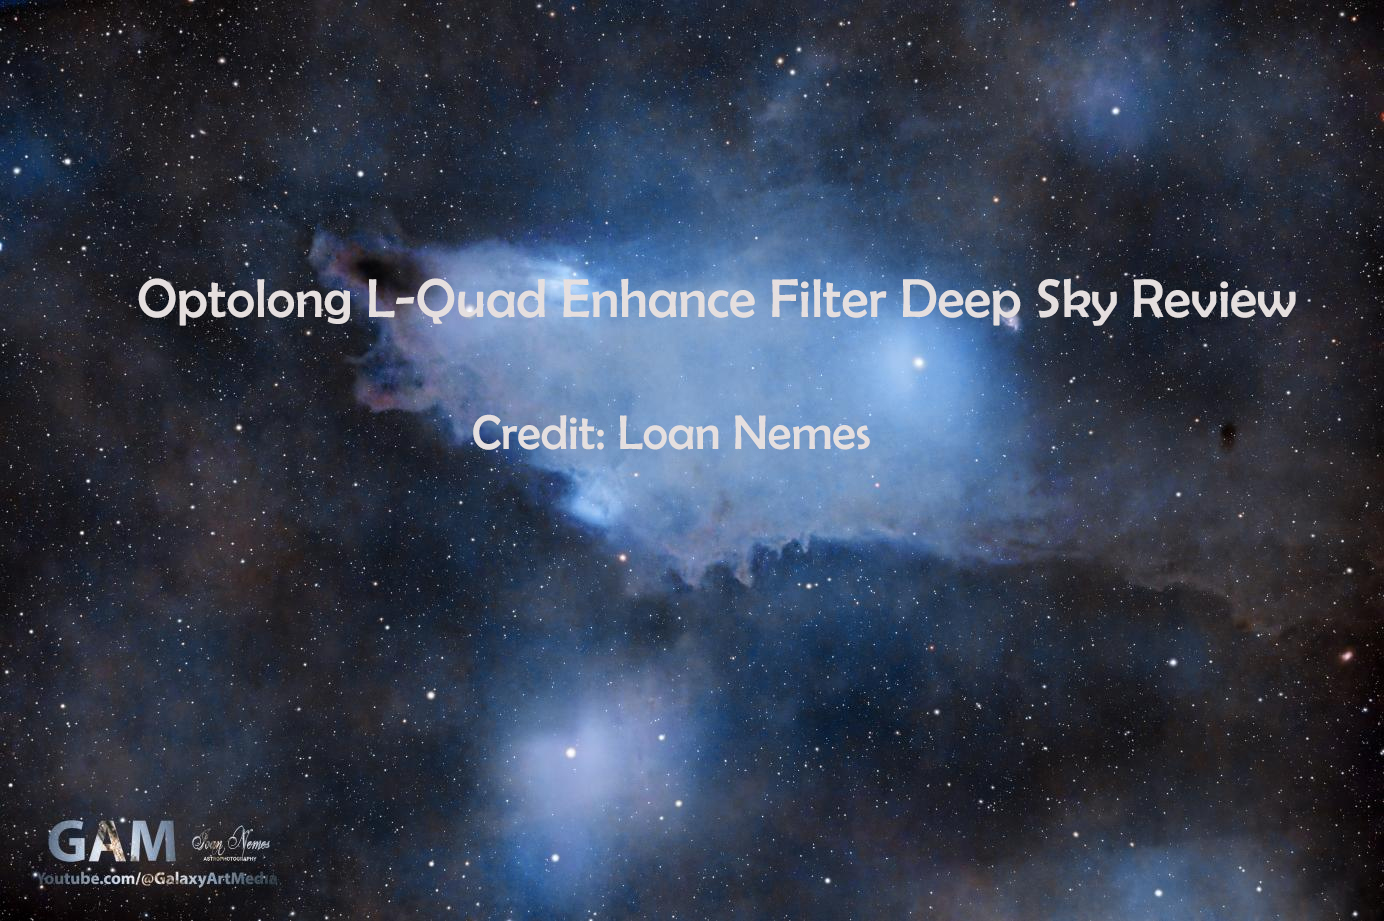 Optolong L-Quad Enhance Filter Deep Sky Review by Astrophotographer Loan Nemes